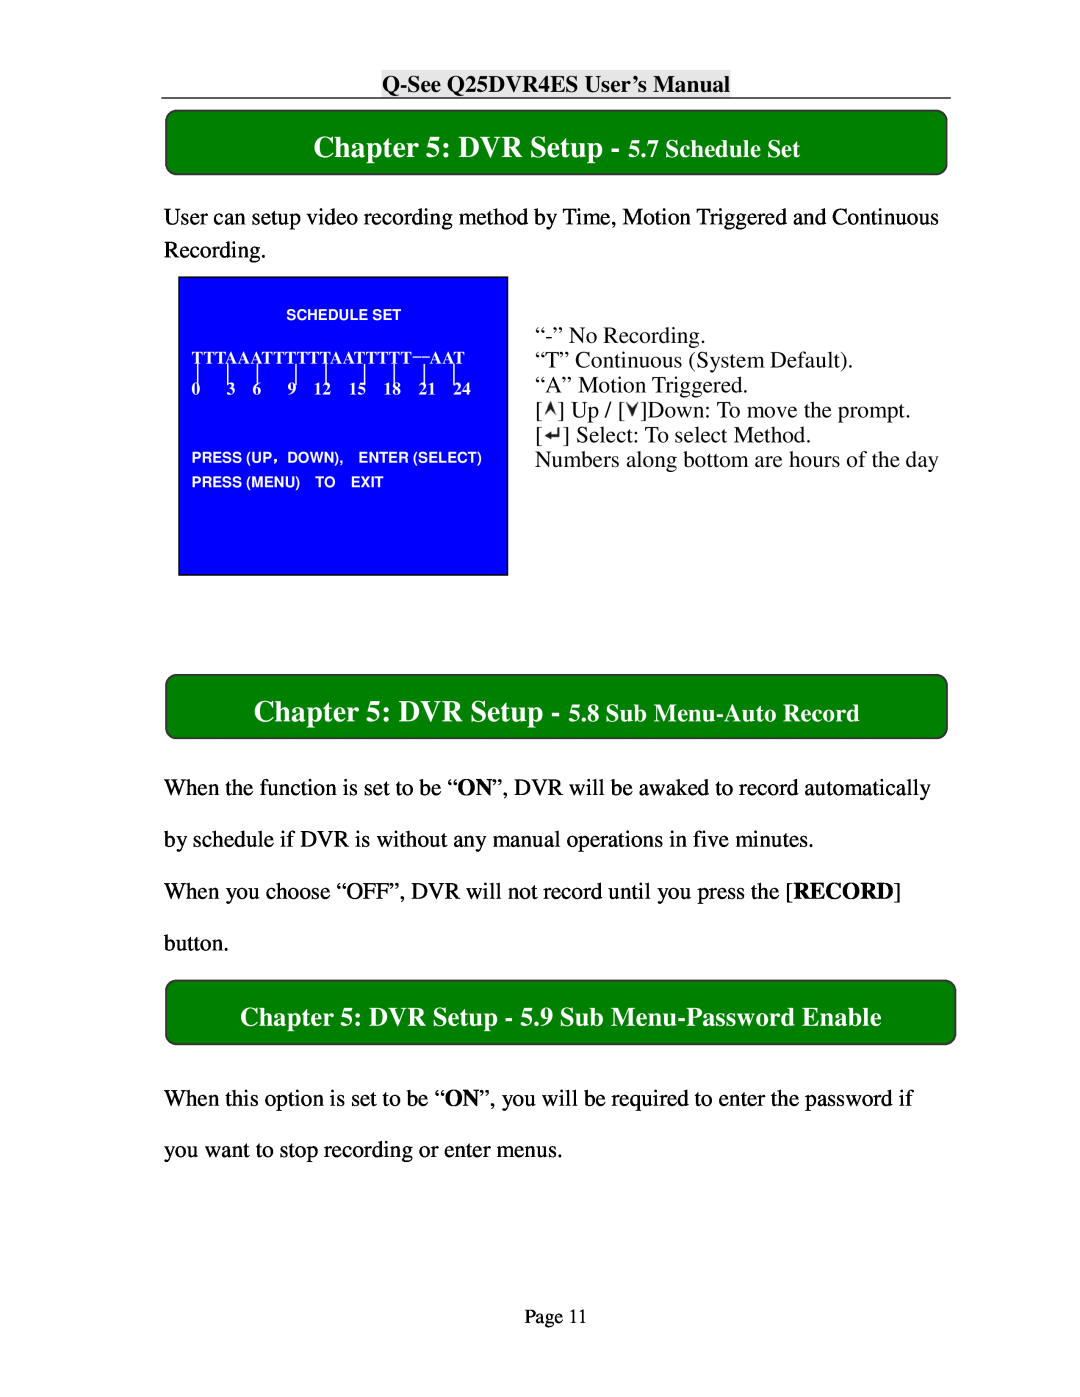 Q-See user manual DVR Setup - 5.7 Schedule Set, DVR Setup - 5.8 Sub Menu-AutoRecord, Q-SeeQ25DVR4ES User’s Manual 